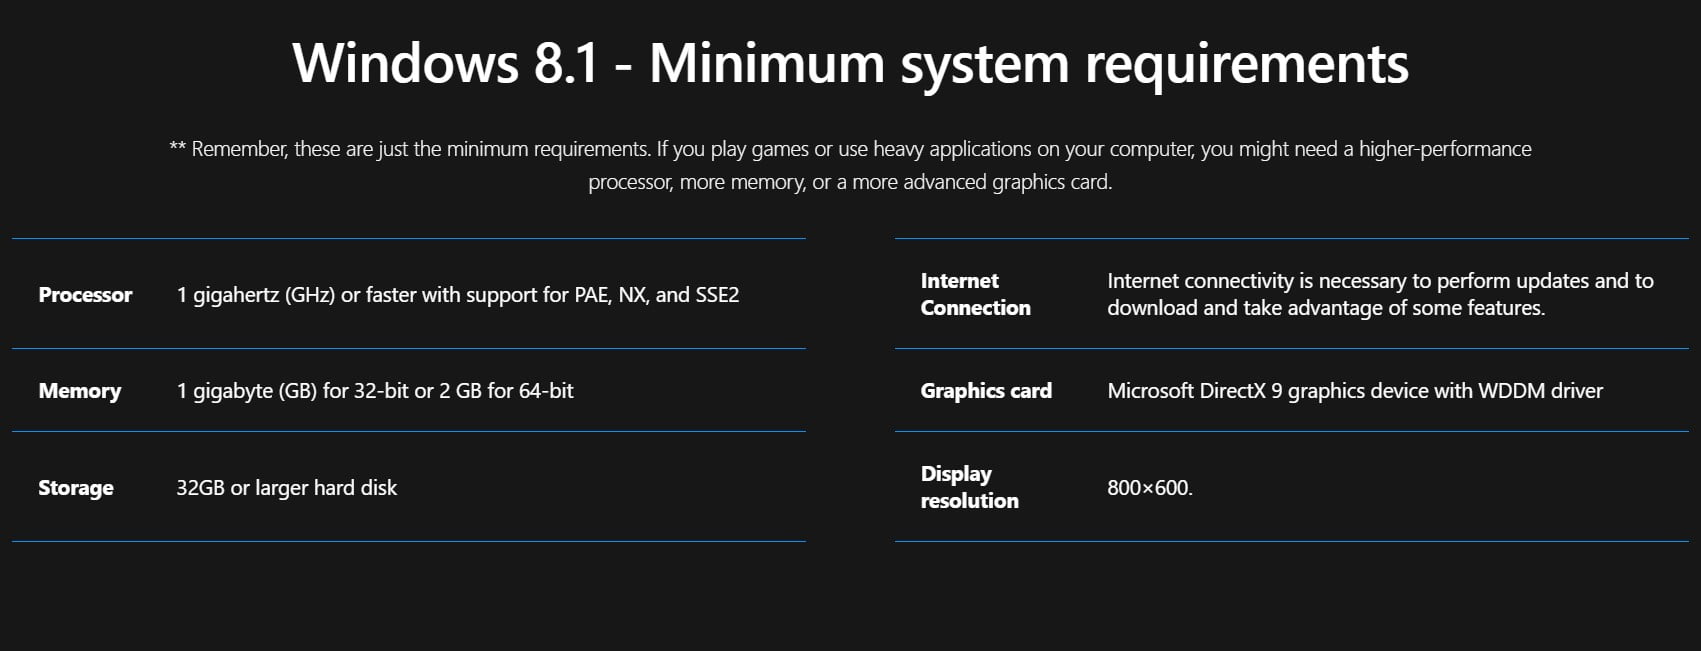 Windows 8.1 Pro lifetime Retail Key - Requirements